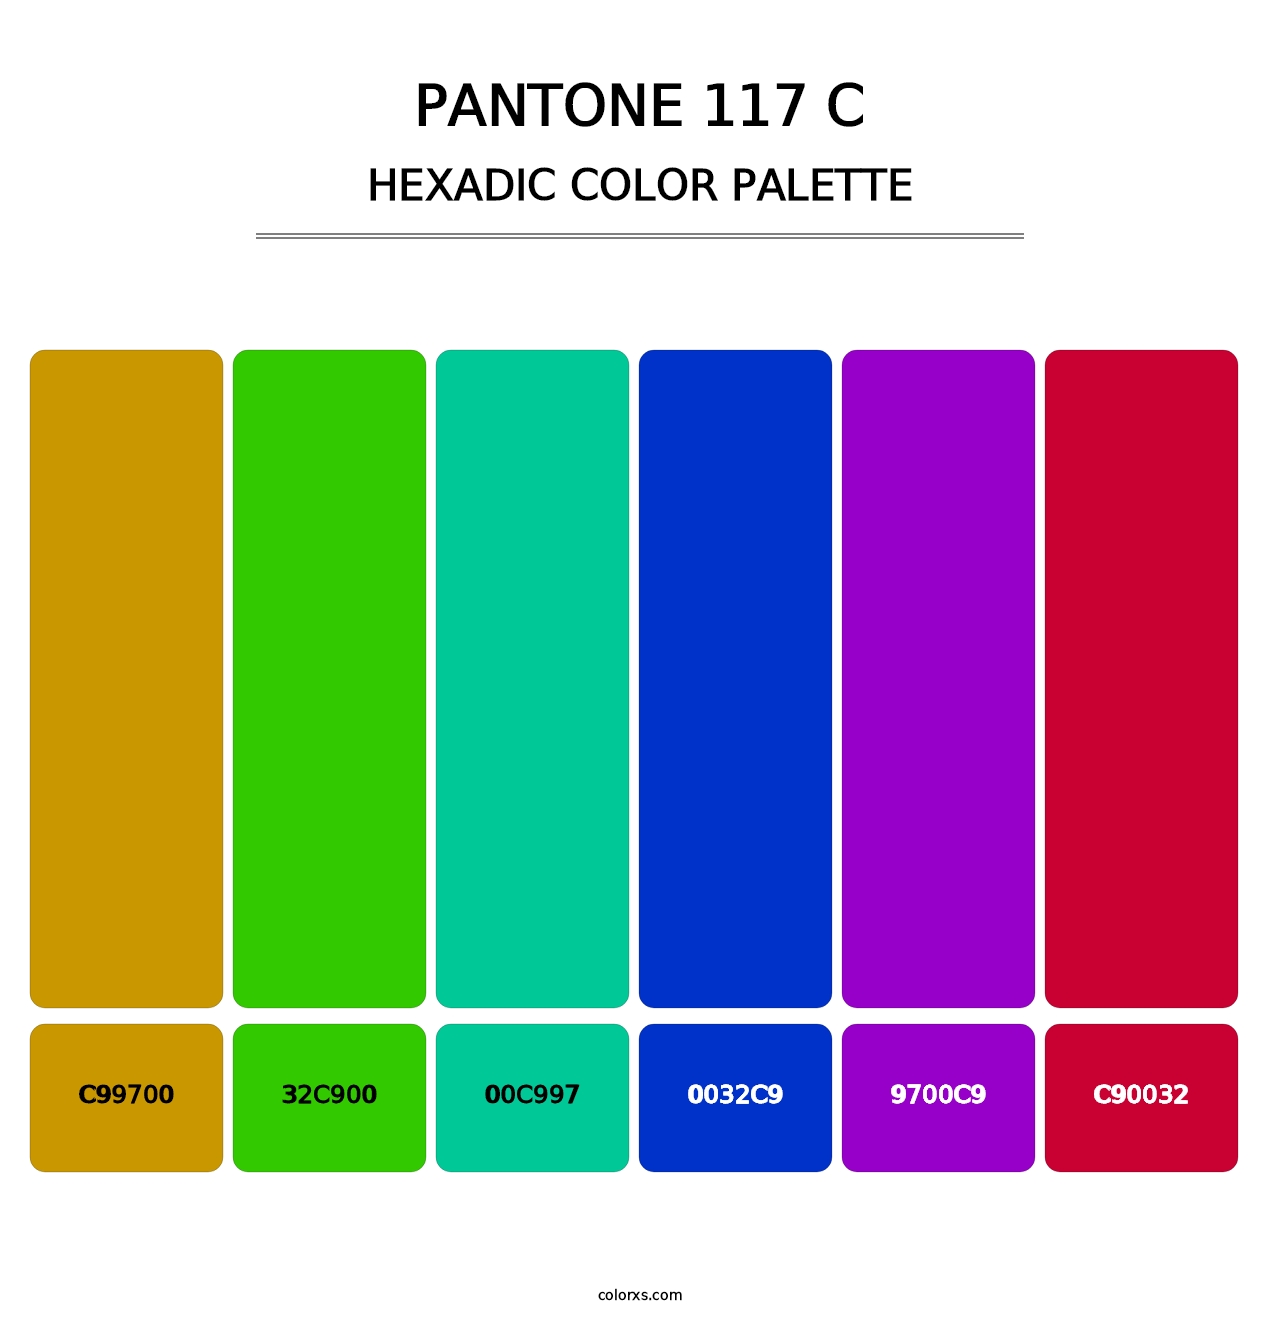 PANTONE 117 C - Hexadic Color Palette